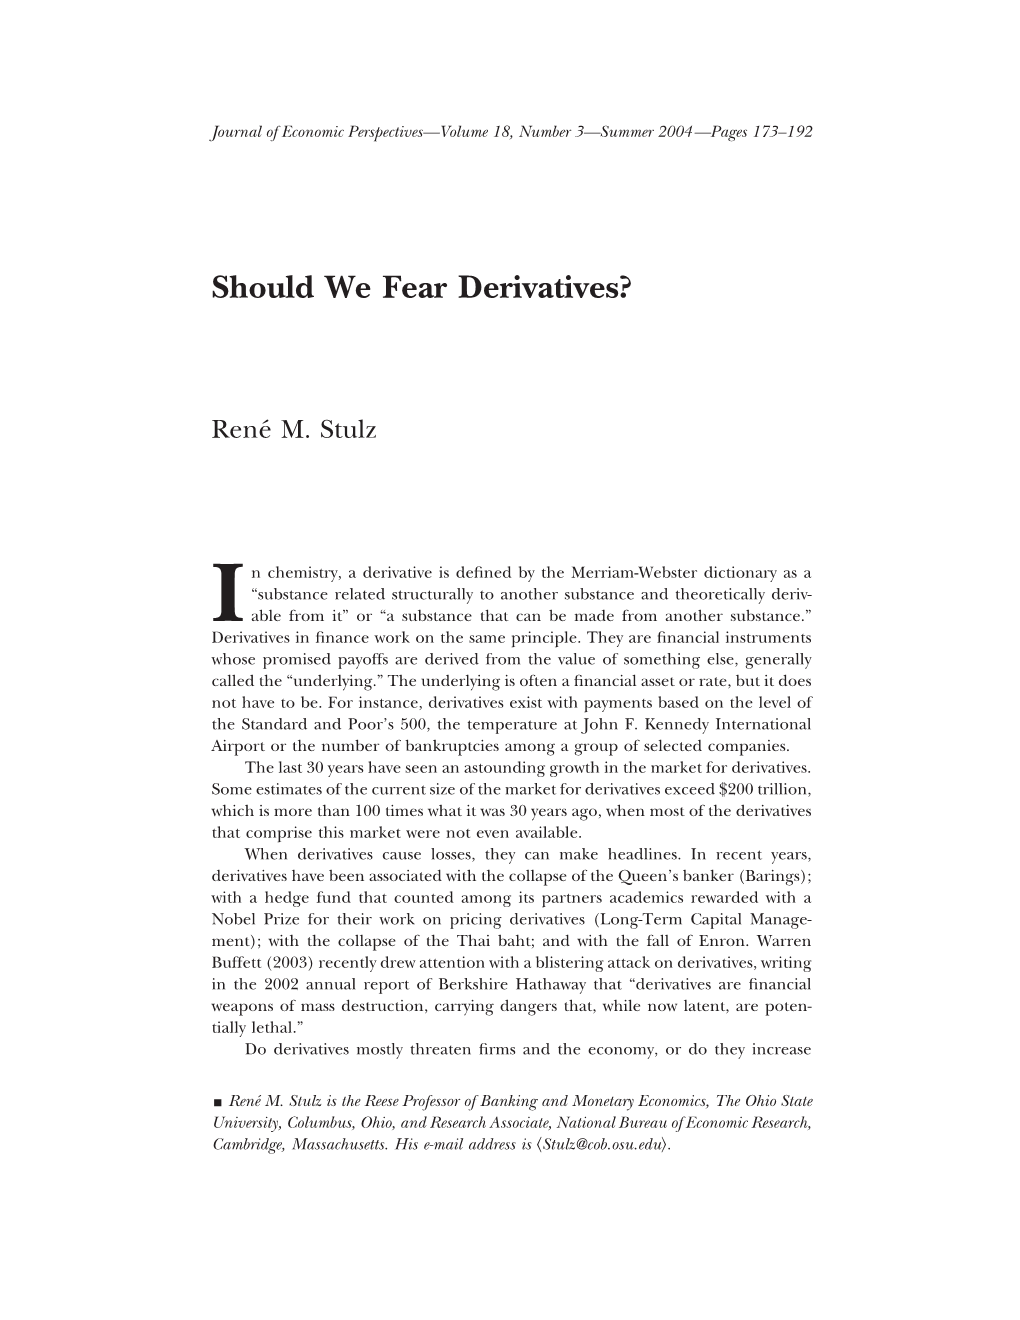 Should We Fear Derivatives?